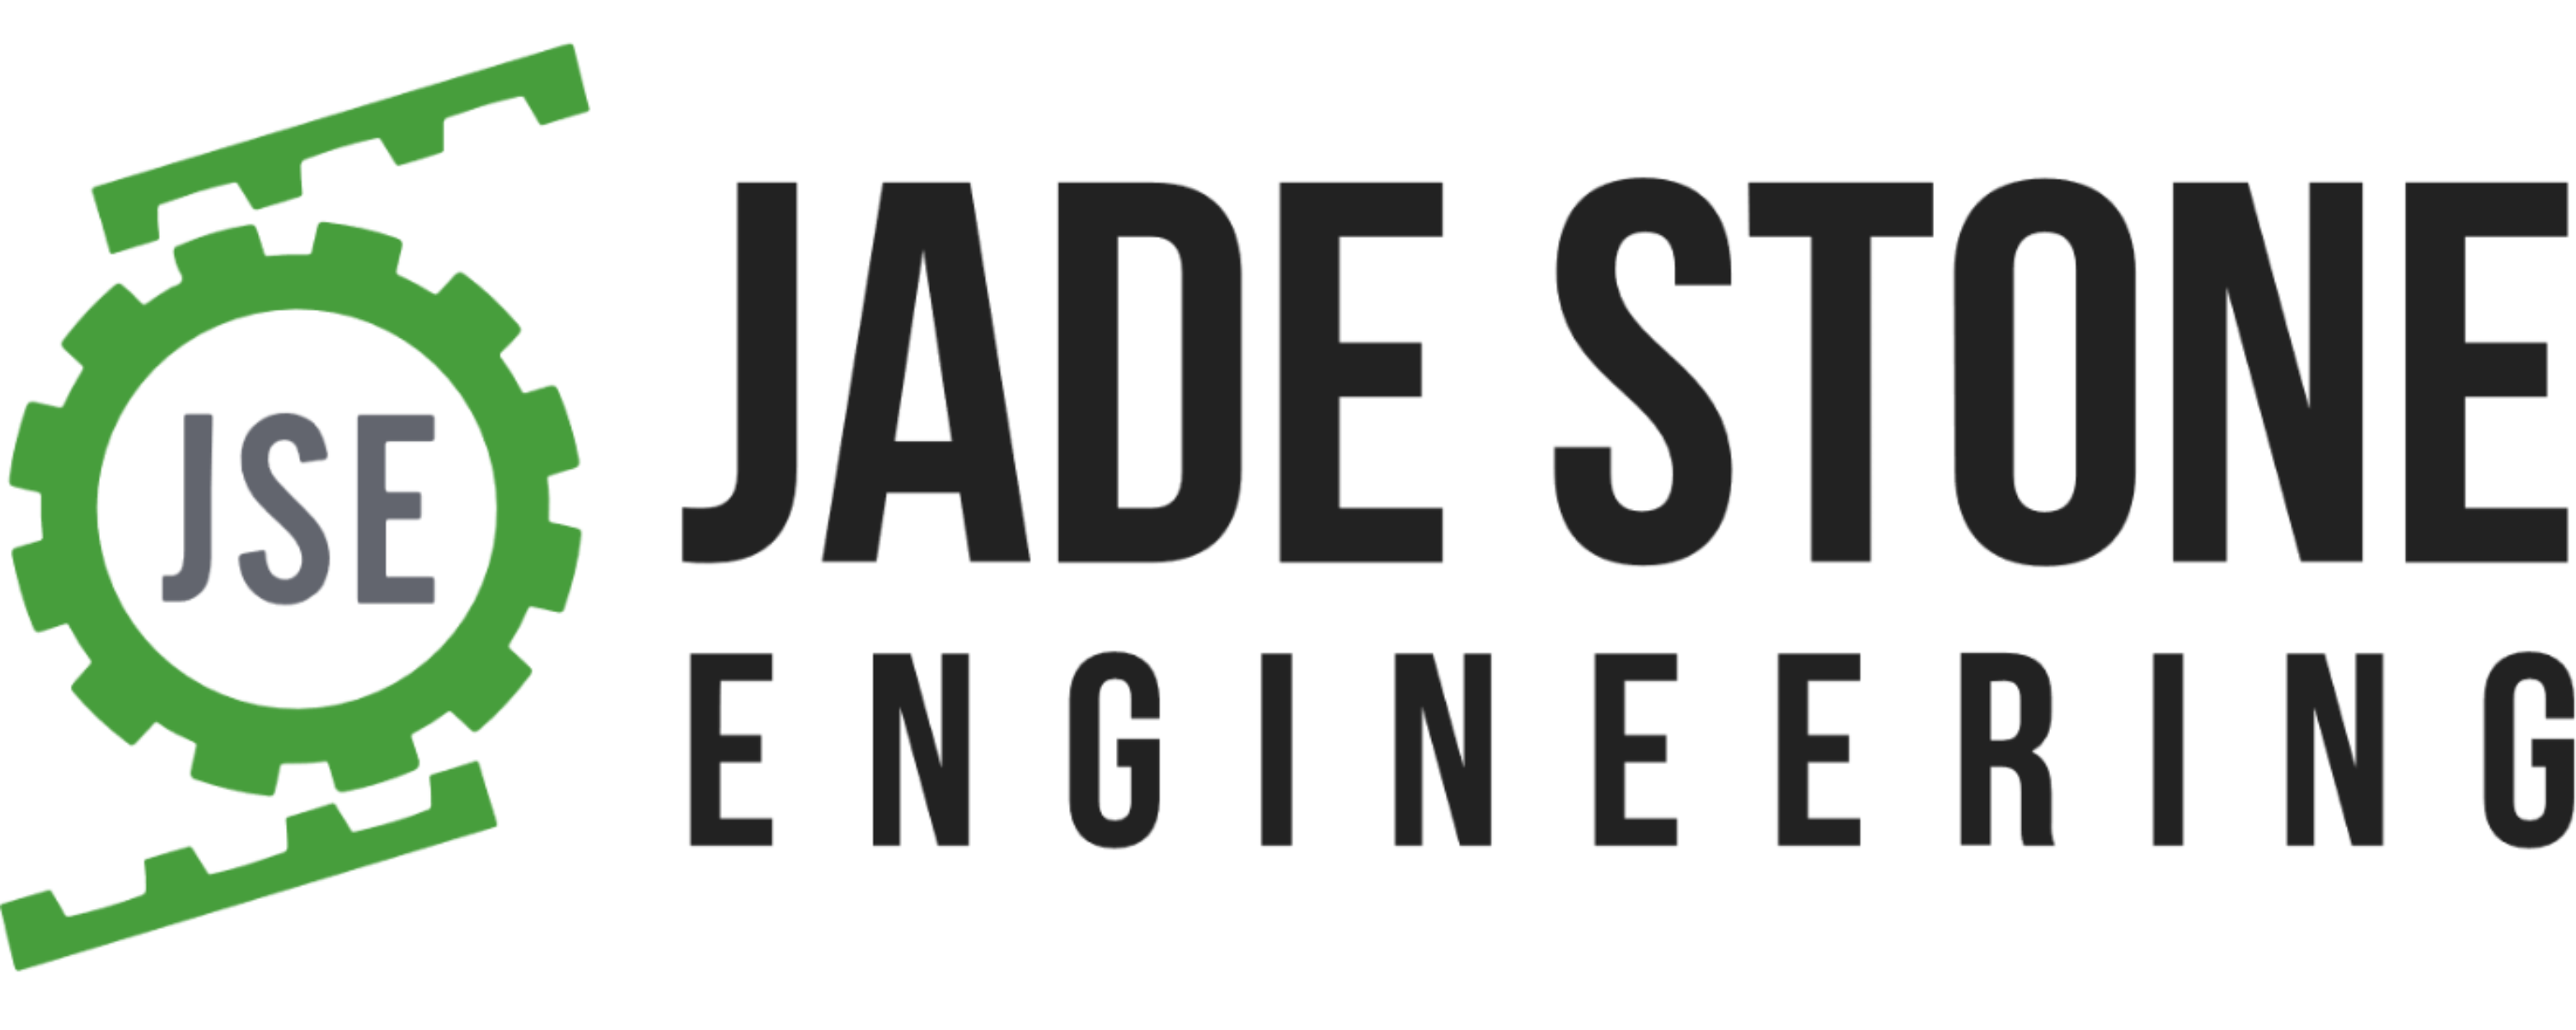 Jade Stone Engineering